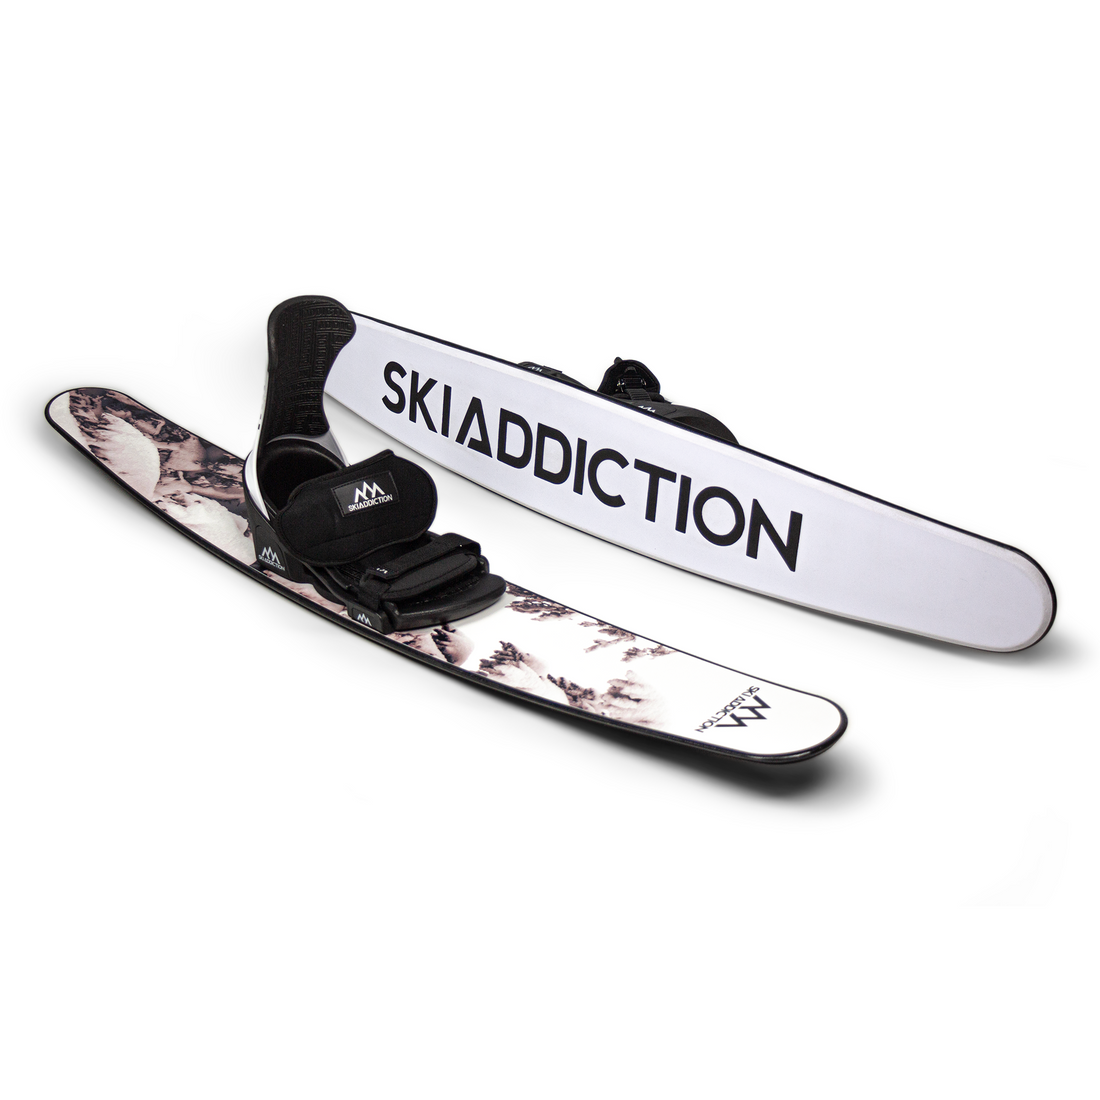 Tramp Skis â€“ Ski Addiction